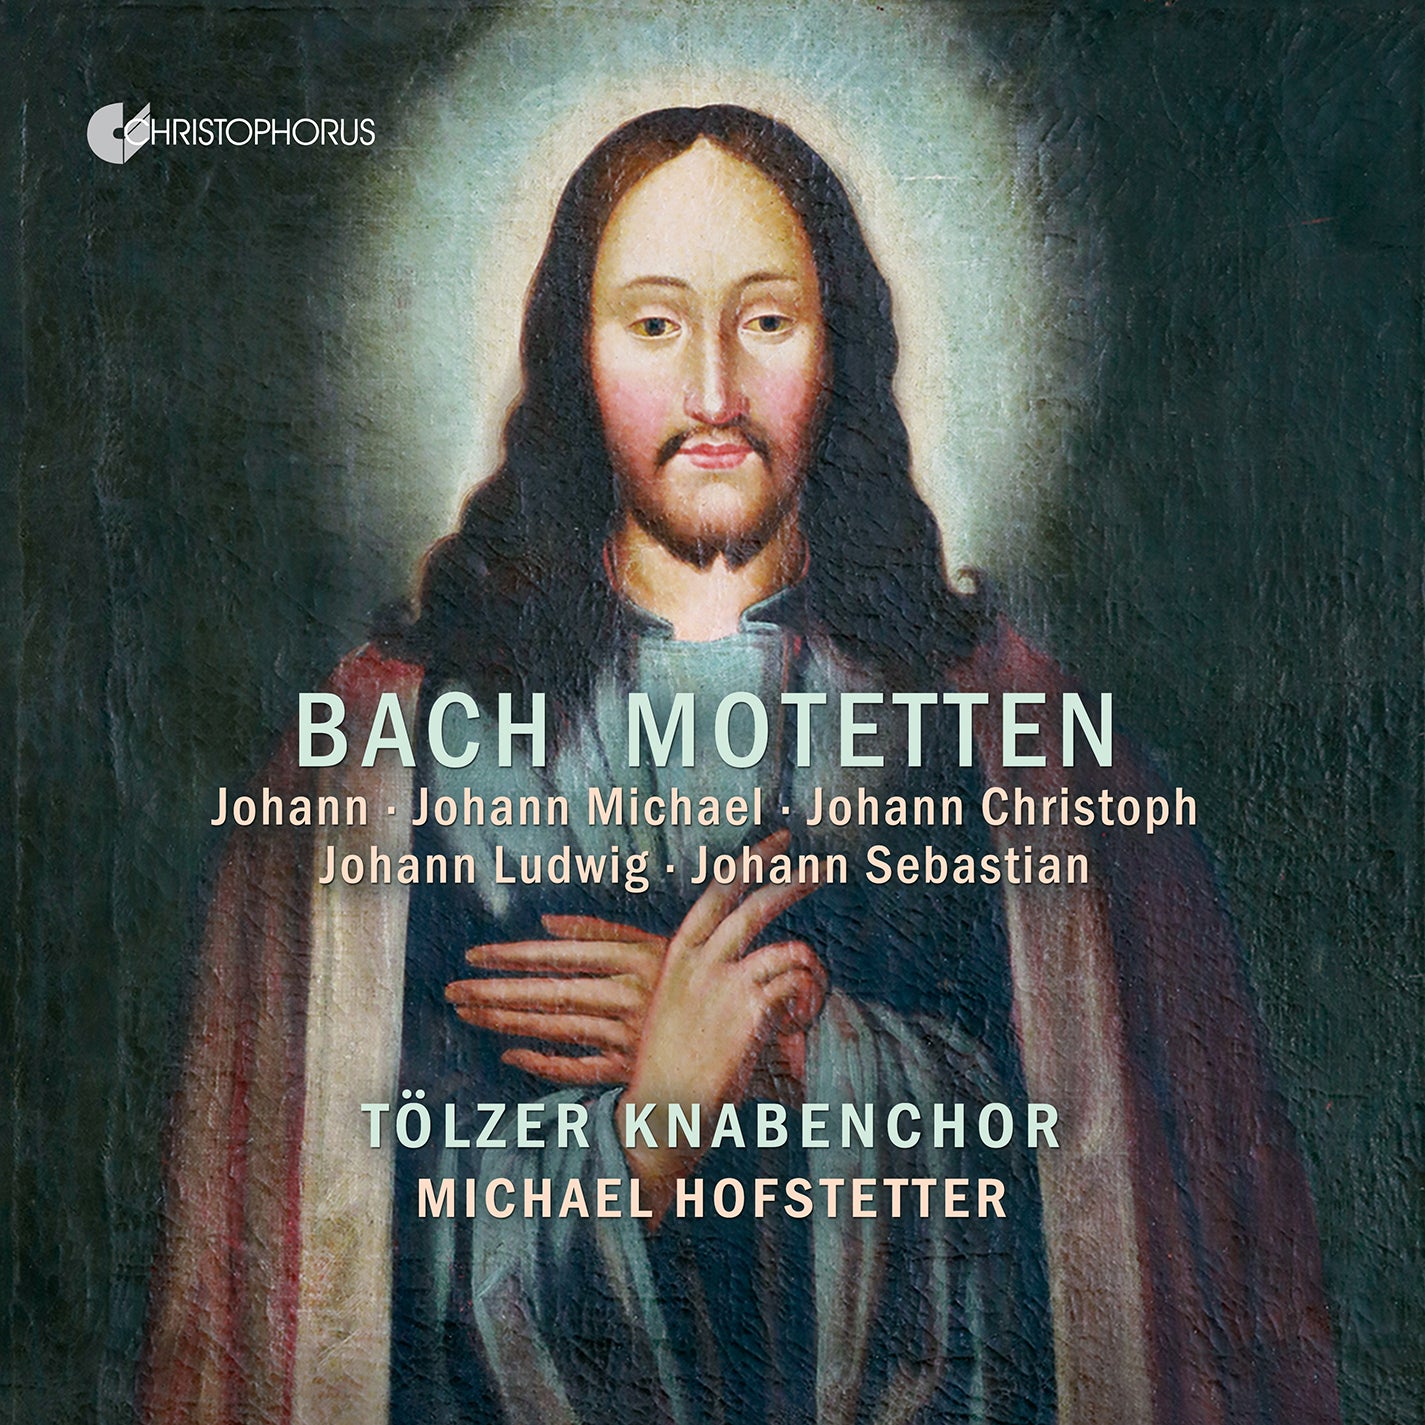 The Bach Family: Motets / Hofstetter, Tölzer Boys' Choir